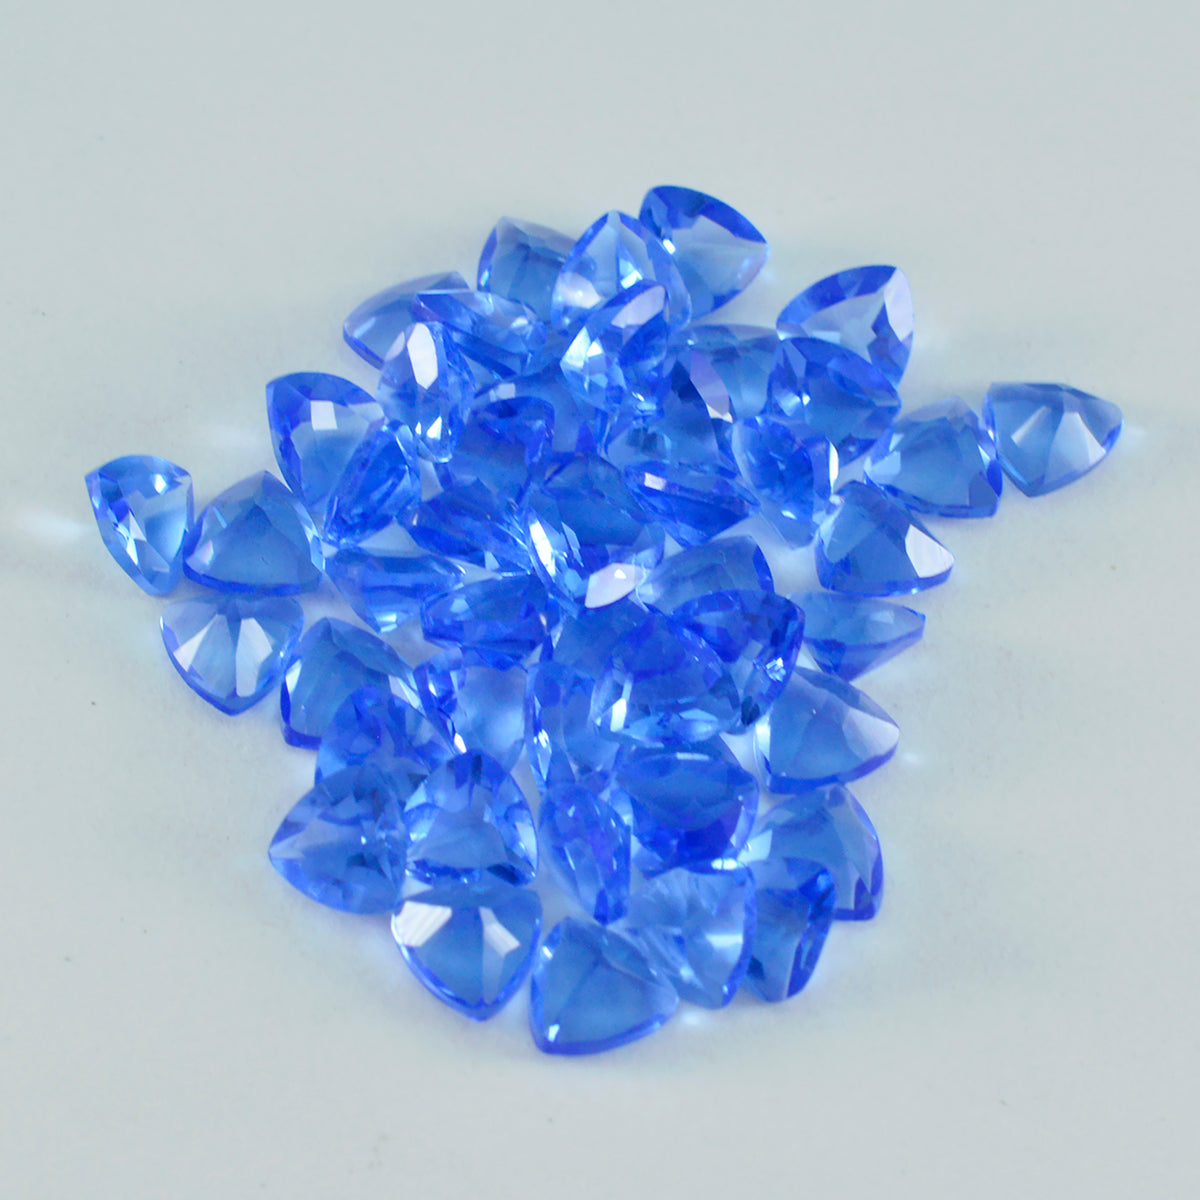 Riyogems 1PC Blue Sapphire CZ Faceted 5x5 mm Trillion Shape great Quality Loose Gem